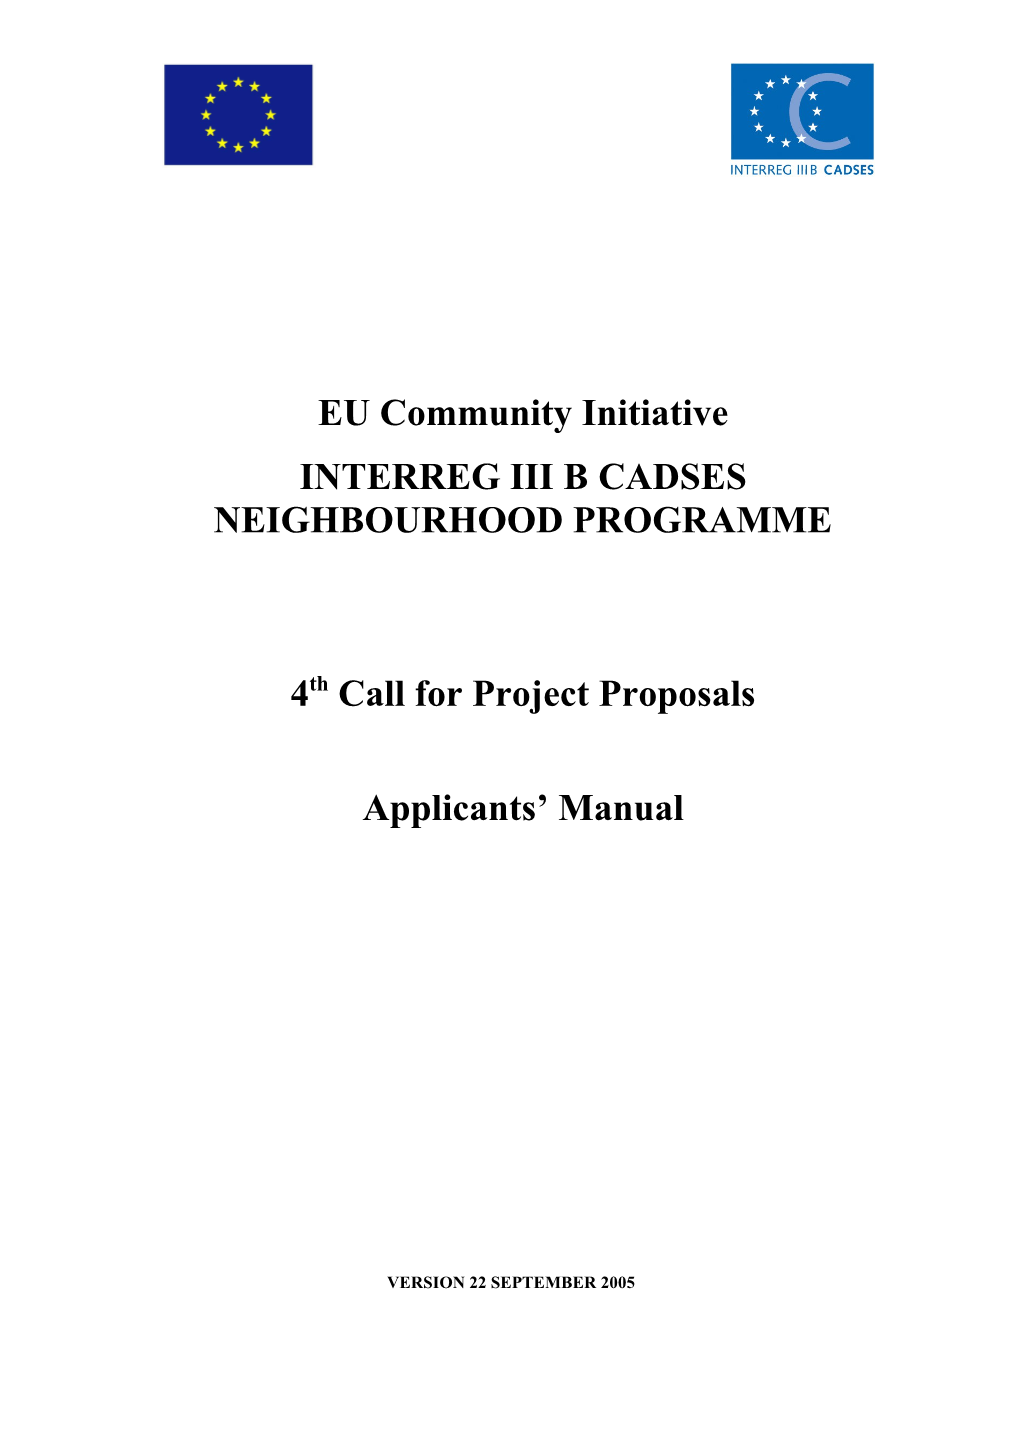 Community Initiative INTERREG III B (2000 2006)